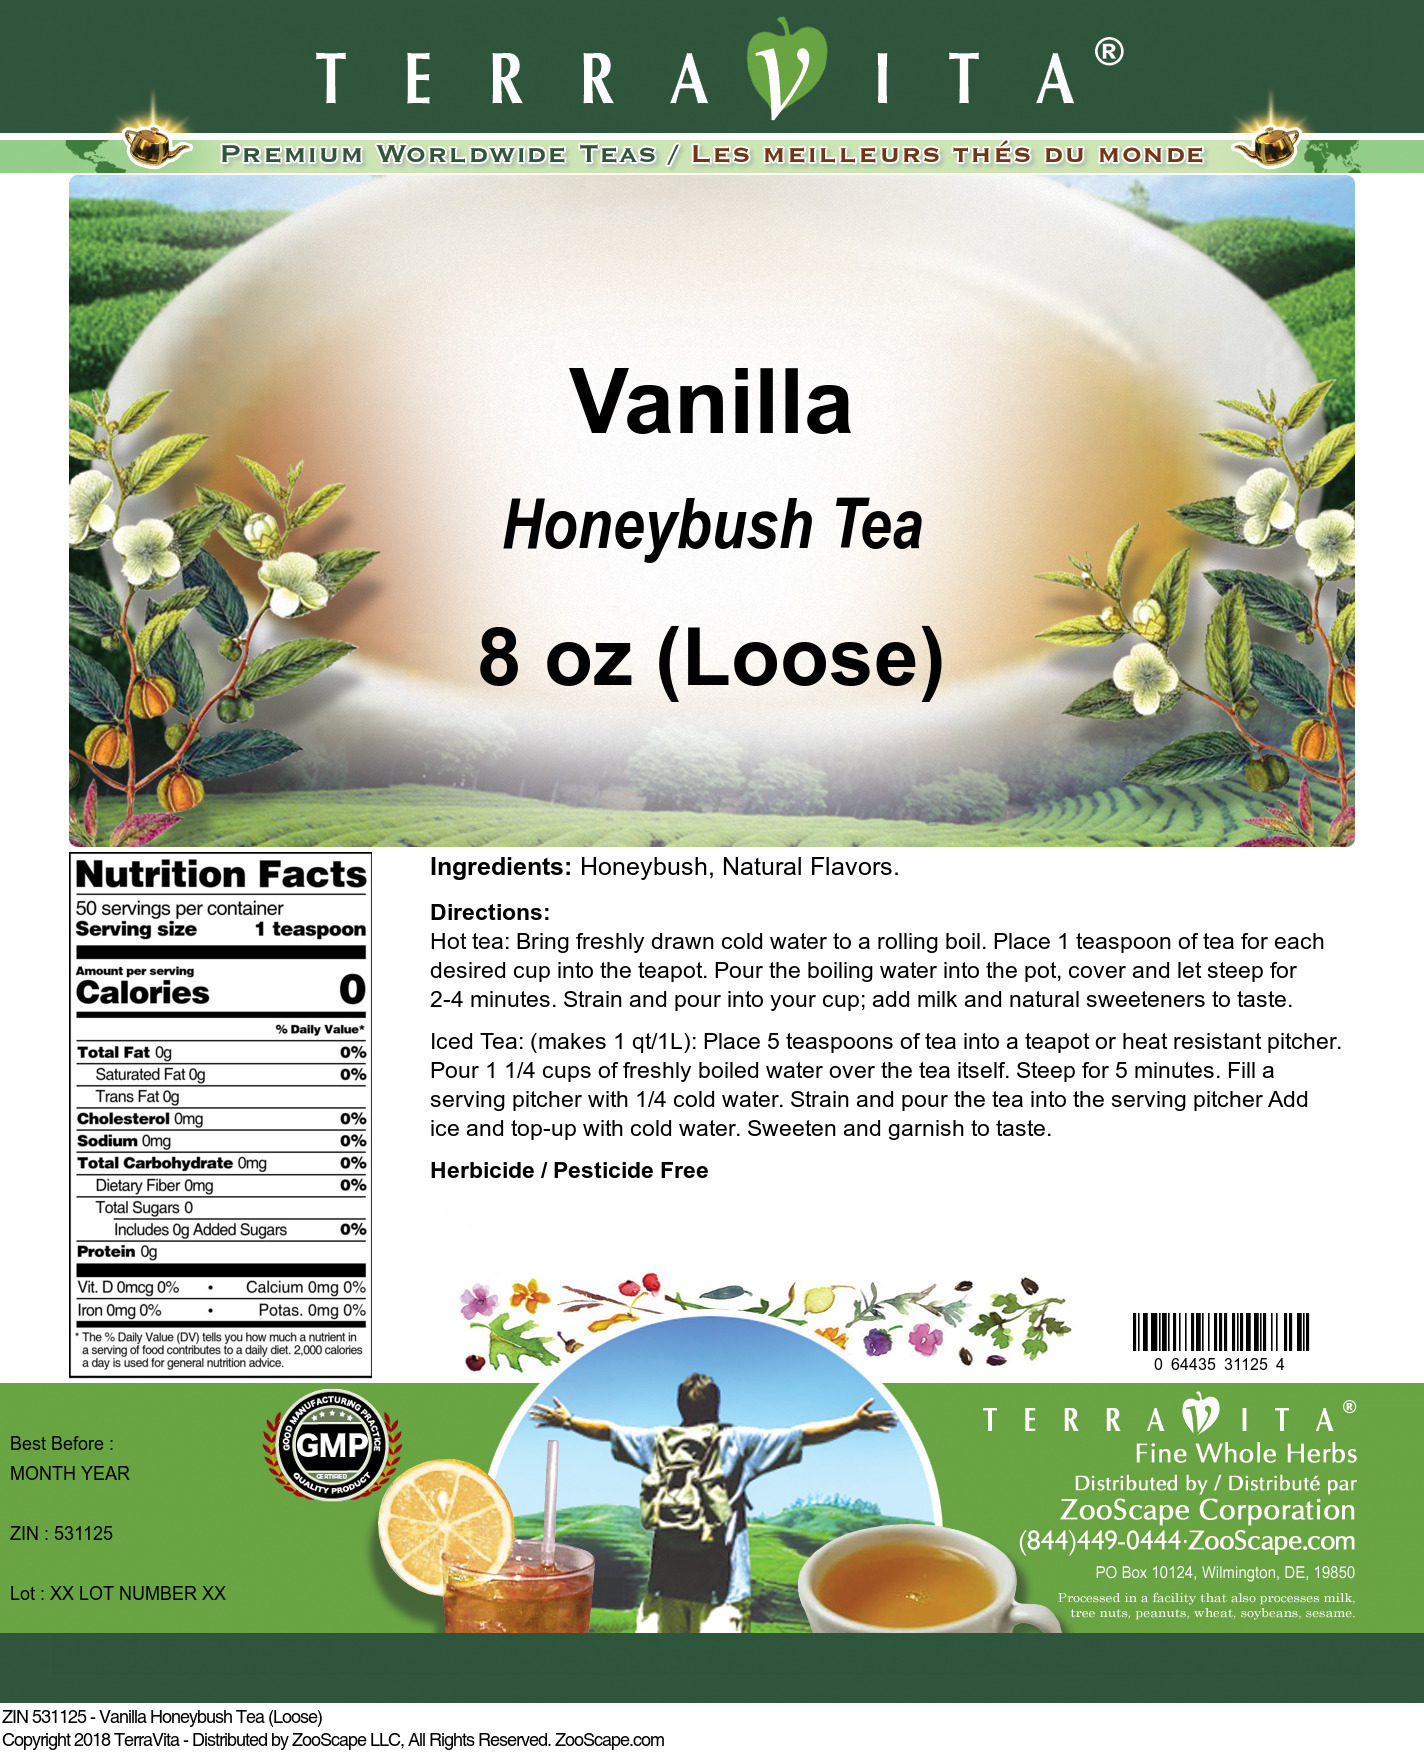 Vanilla Honeybush Tea (Loose) - Label